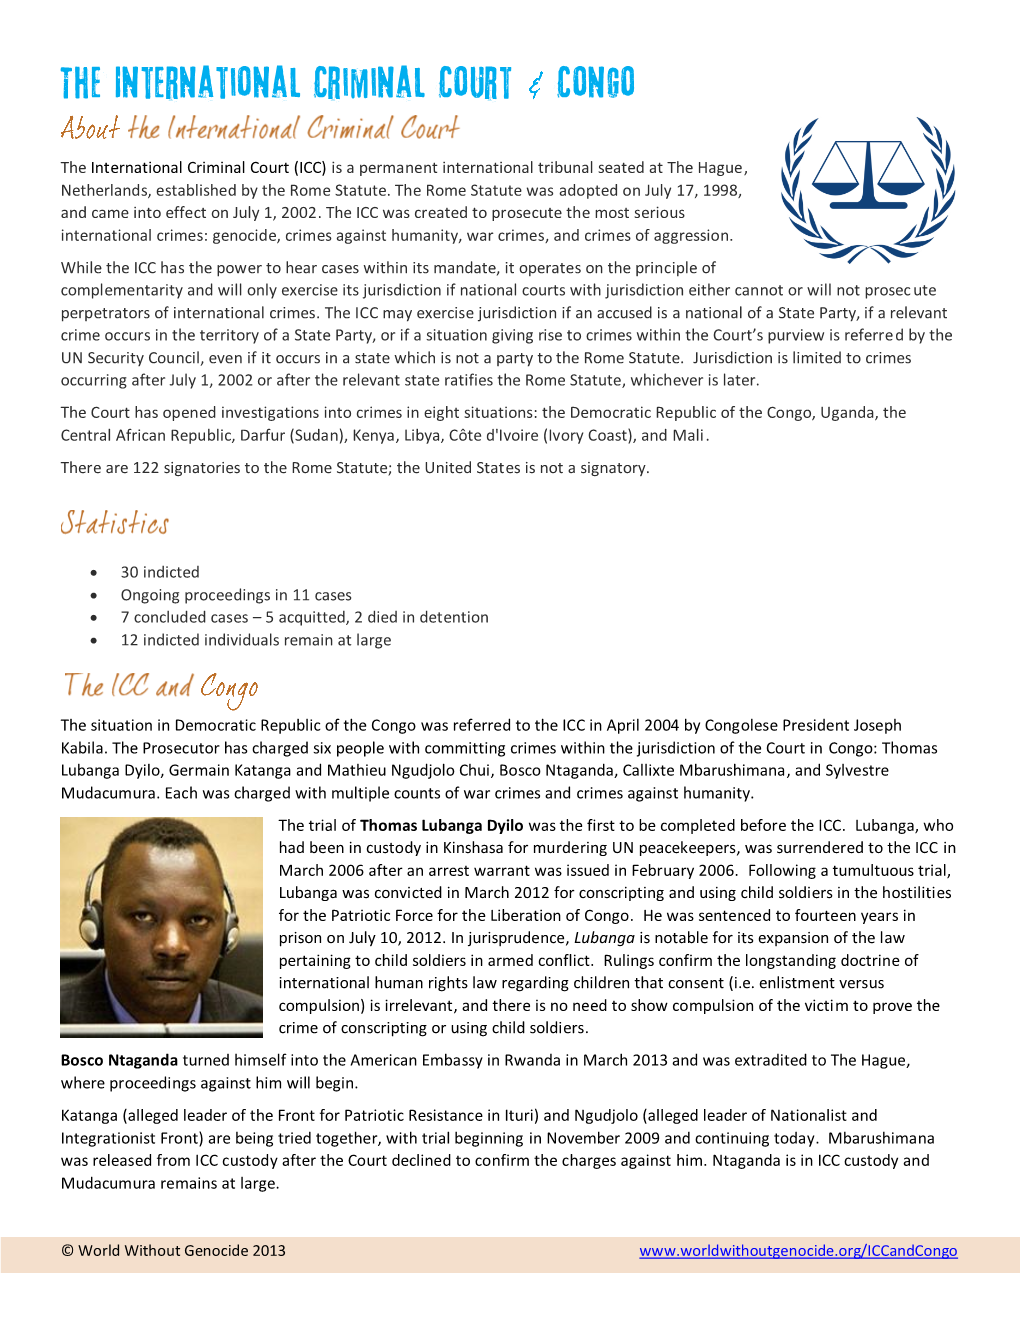 The International Criminal Court Congo